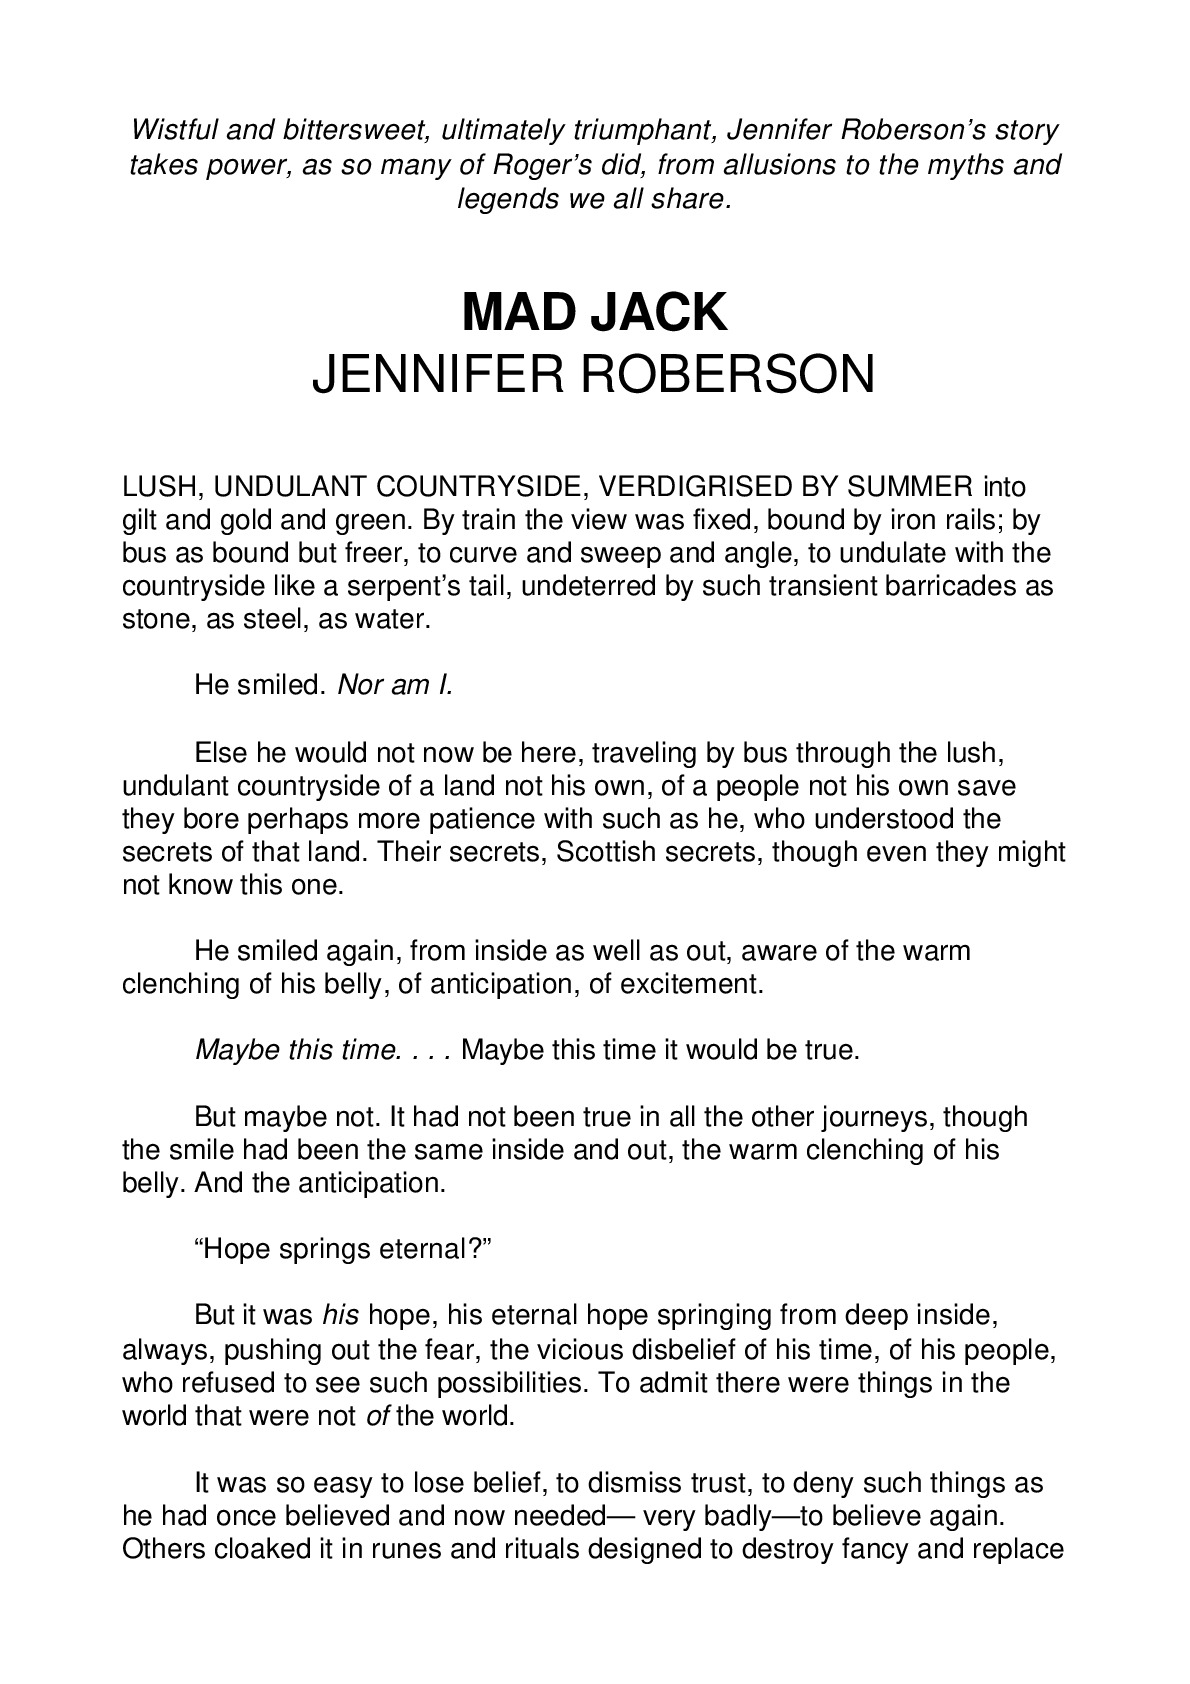 Jennifer Roberson – Mad Jack